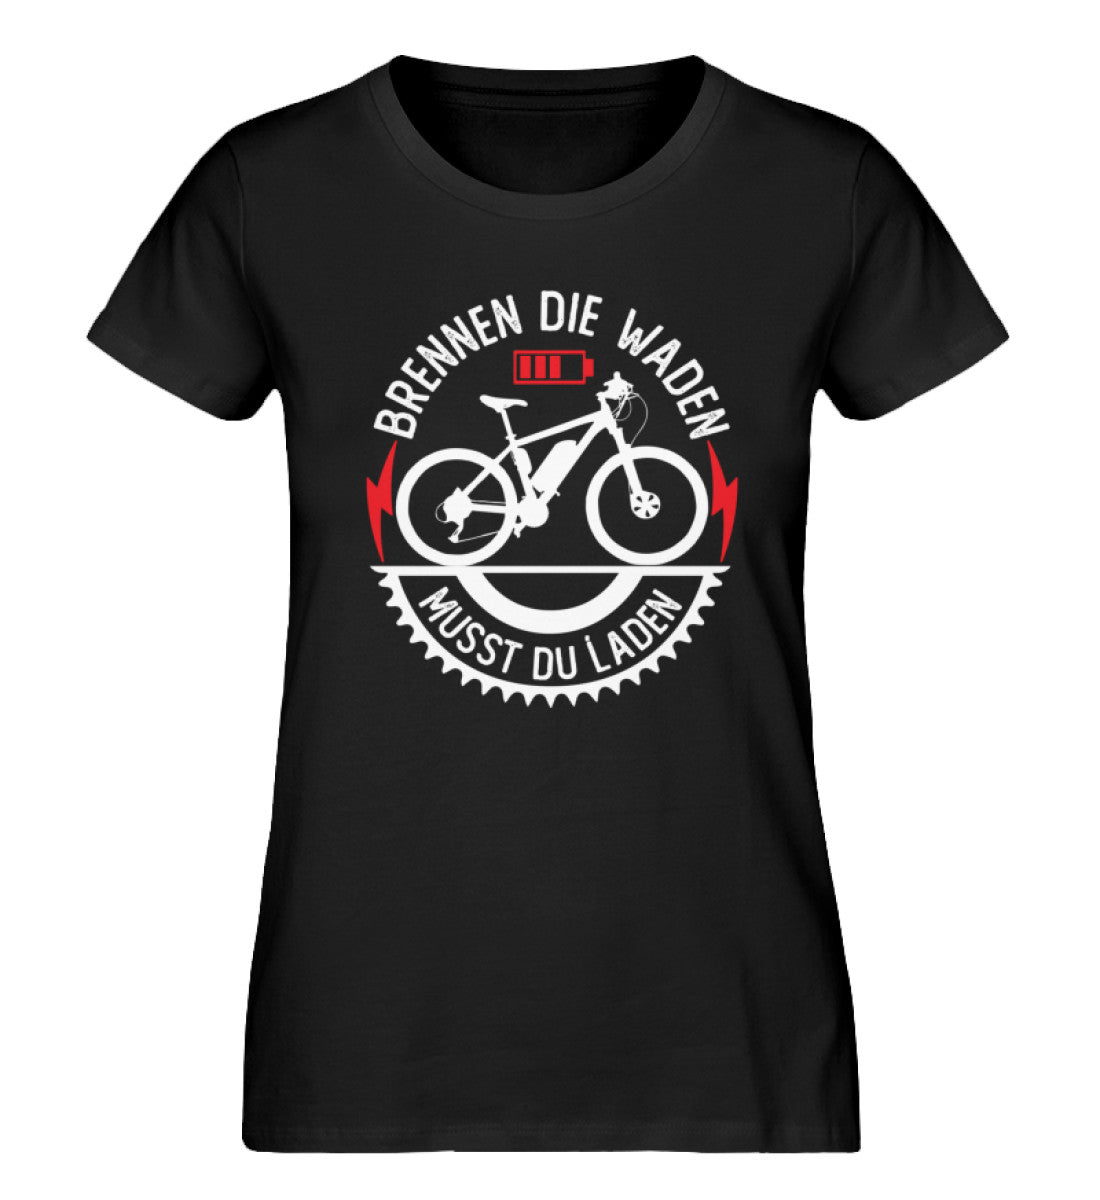 Brennen die Waden musst du laden - Damen Premium Organic T-Shirt e-bike Schwarz